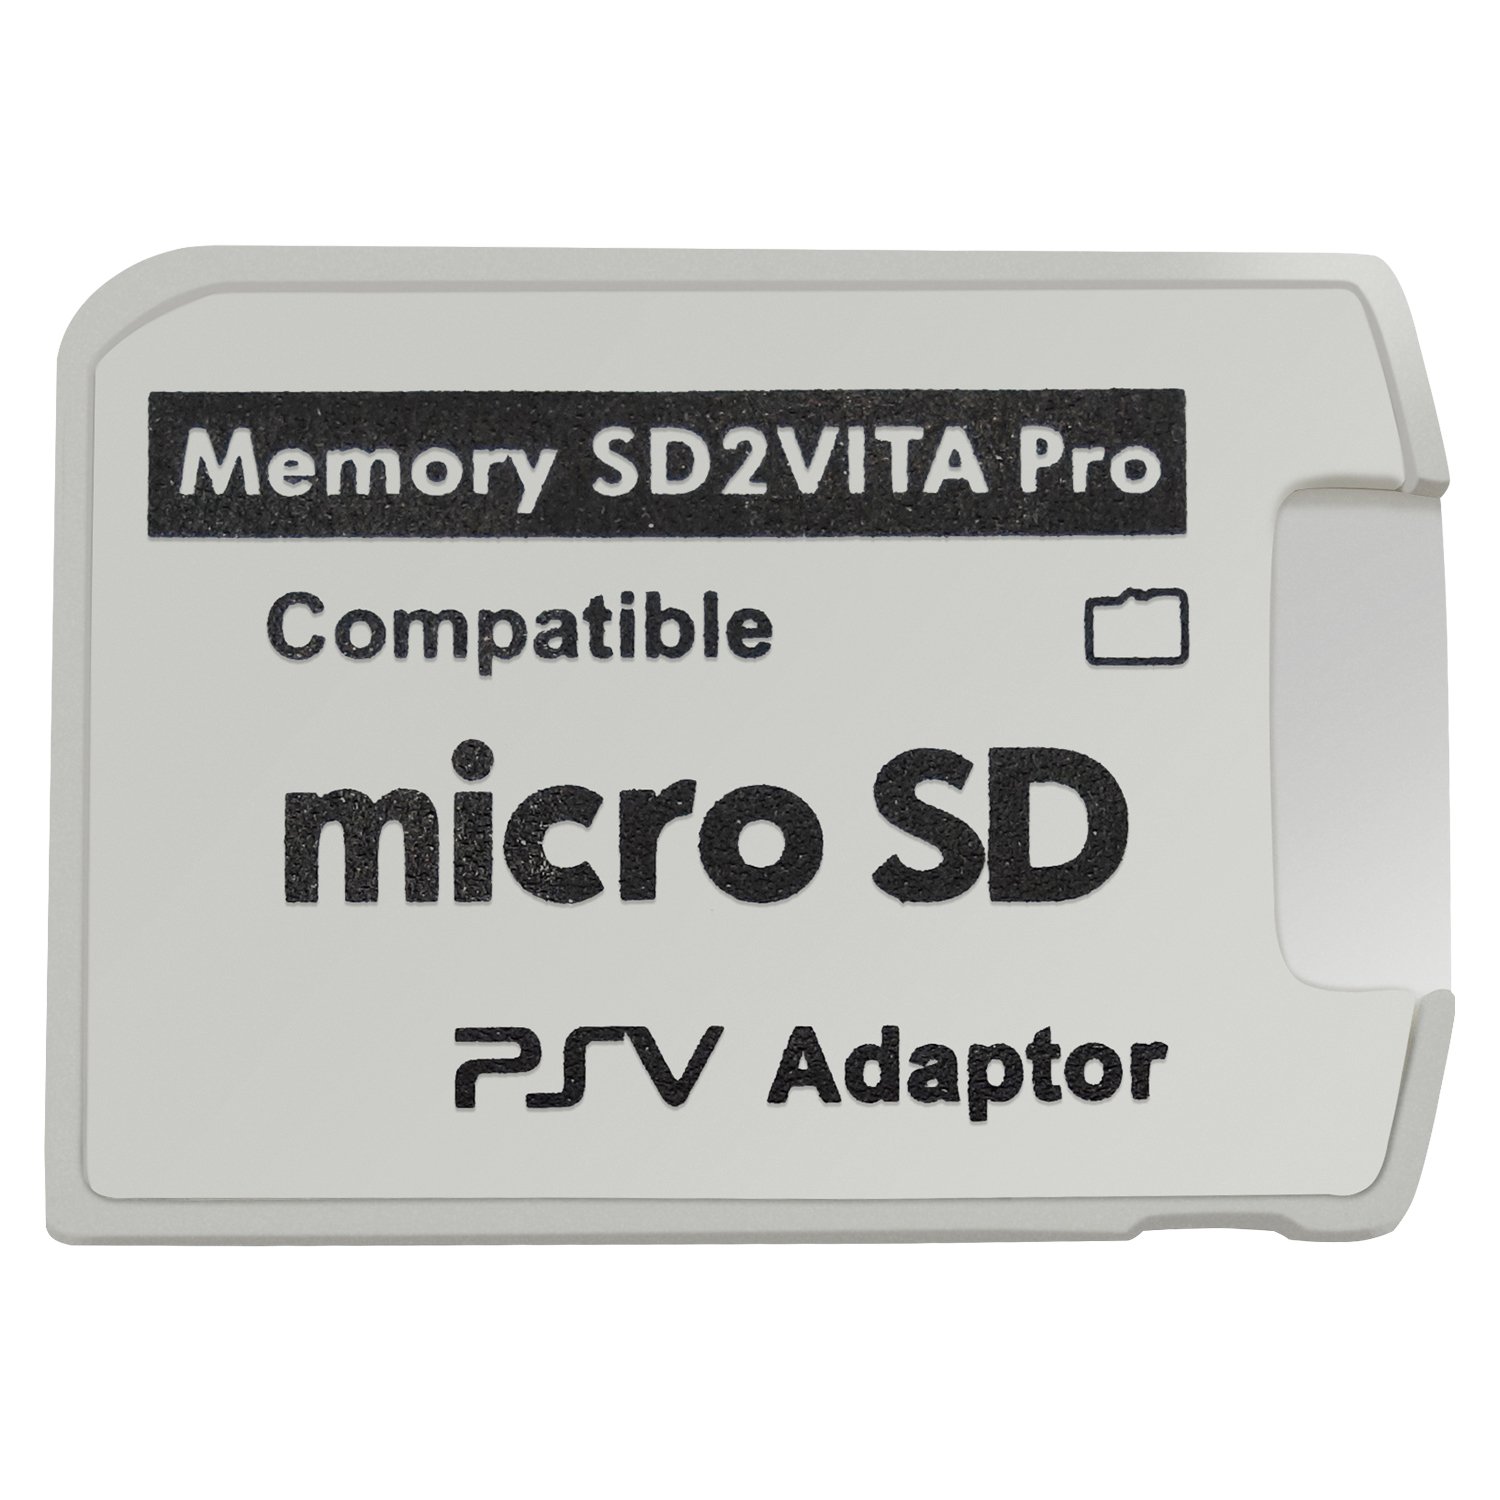 New World Ultimate Version SD2Vita 5.0 Memory Card Adapter, PS Vita PSVSD Micro SD Adapter SD2VITA PRO PSV 1000/2000 PSTV Support FW 3.60 HENkaku + firmware 3.65-3.68, which has been released